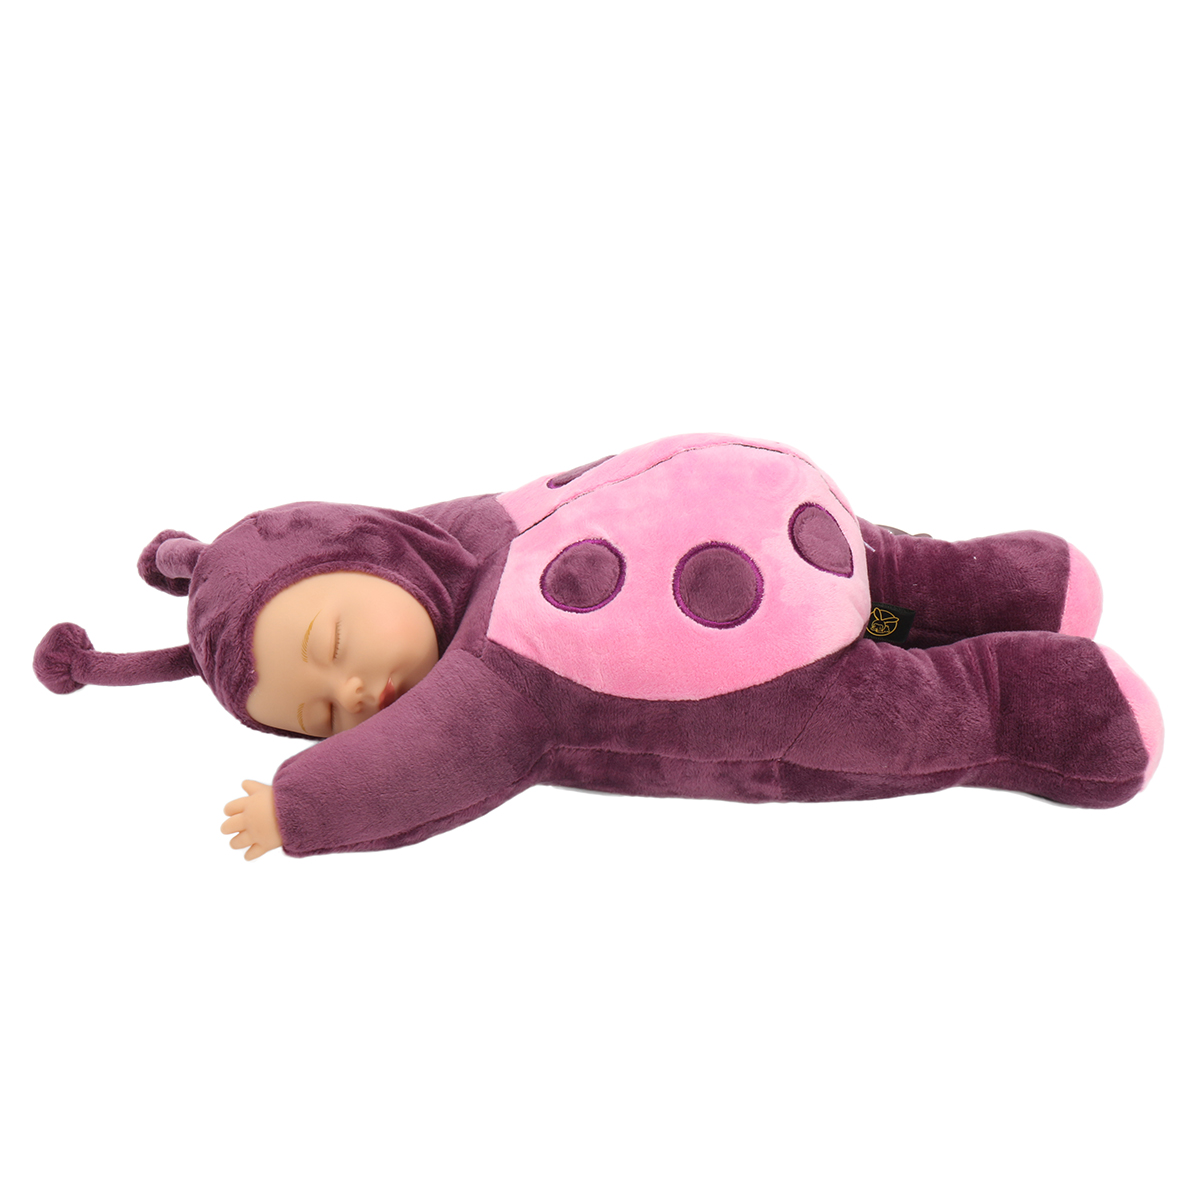 12quot-Handmade-Sleeping-Reborn-Dolls-Ladybird-Full-Soft-Silicone-Lifelike-Green-Stuffed-Plush-Toy-1411431